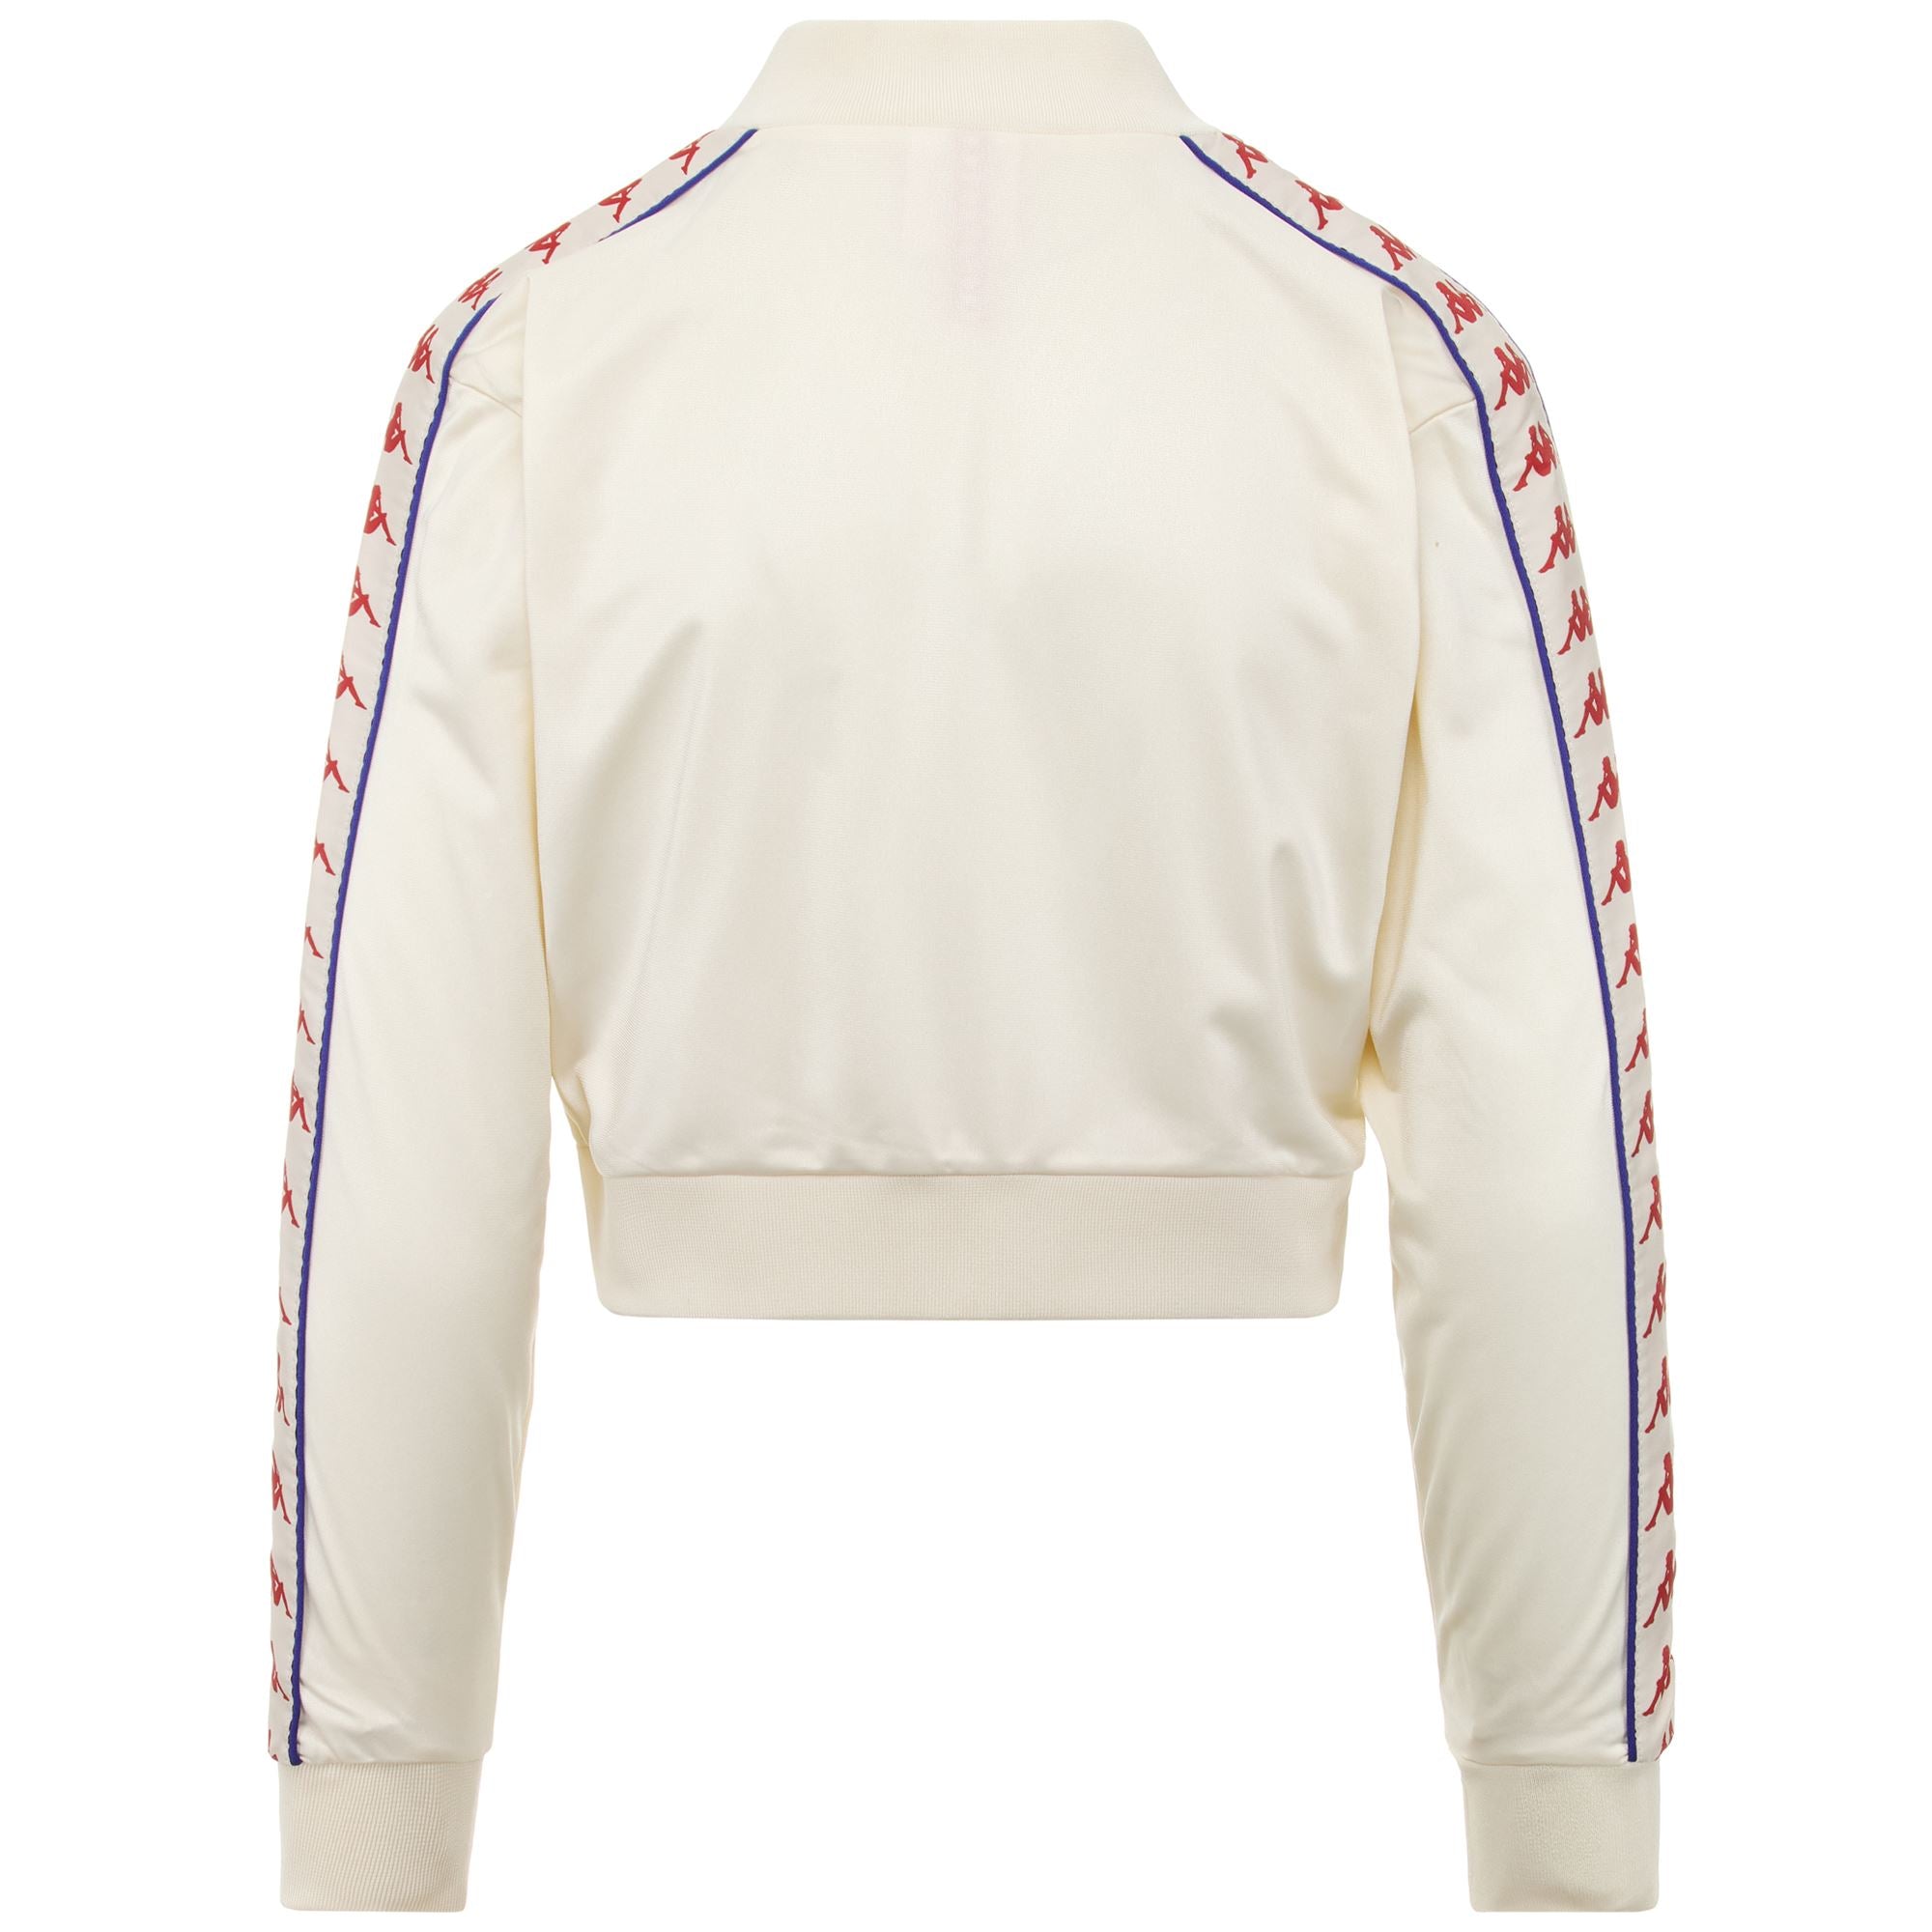 222 BANDA ASBER - Fleece - Jacket - Woman - WHITE ANTIQUE-RED-BLUE ROYAL